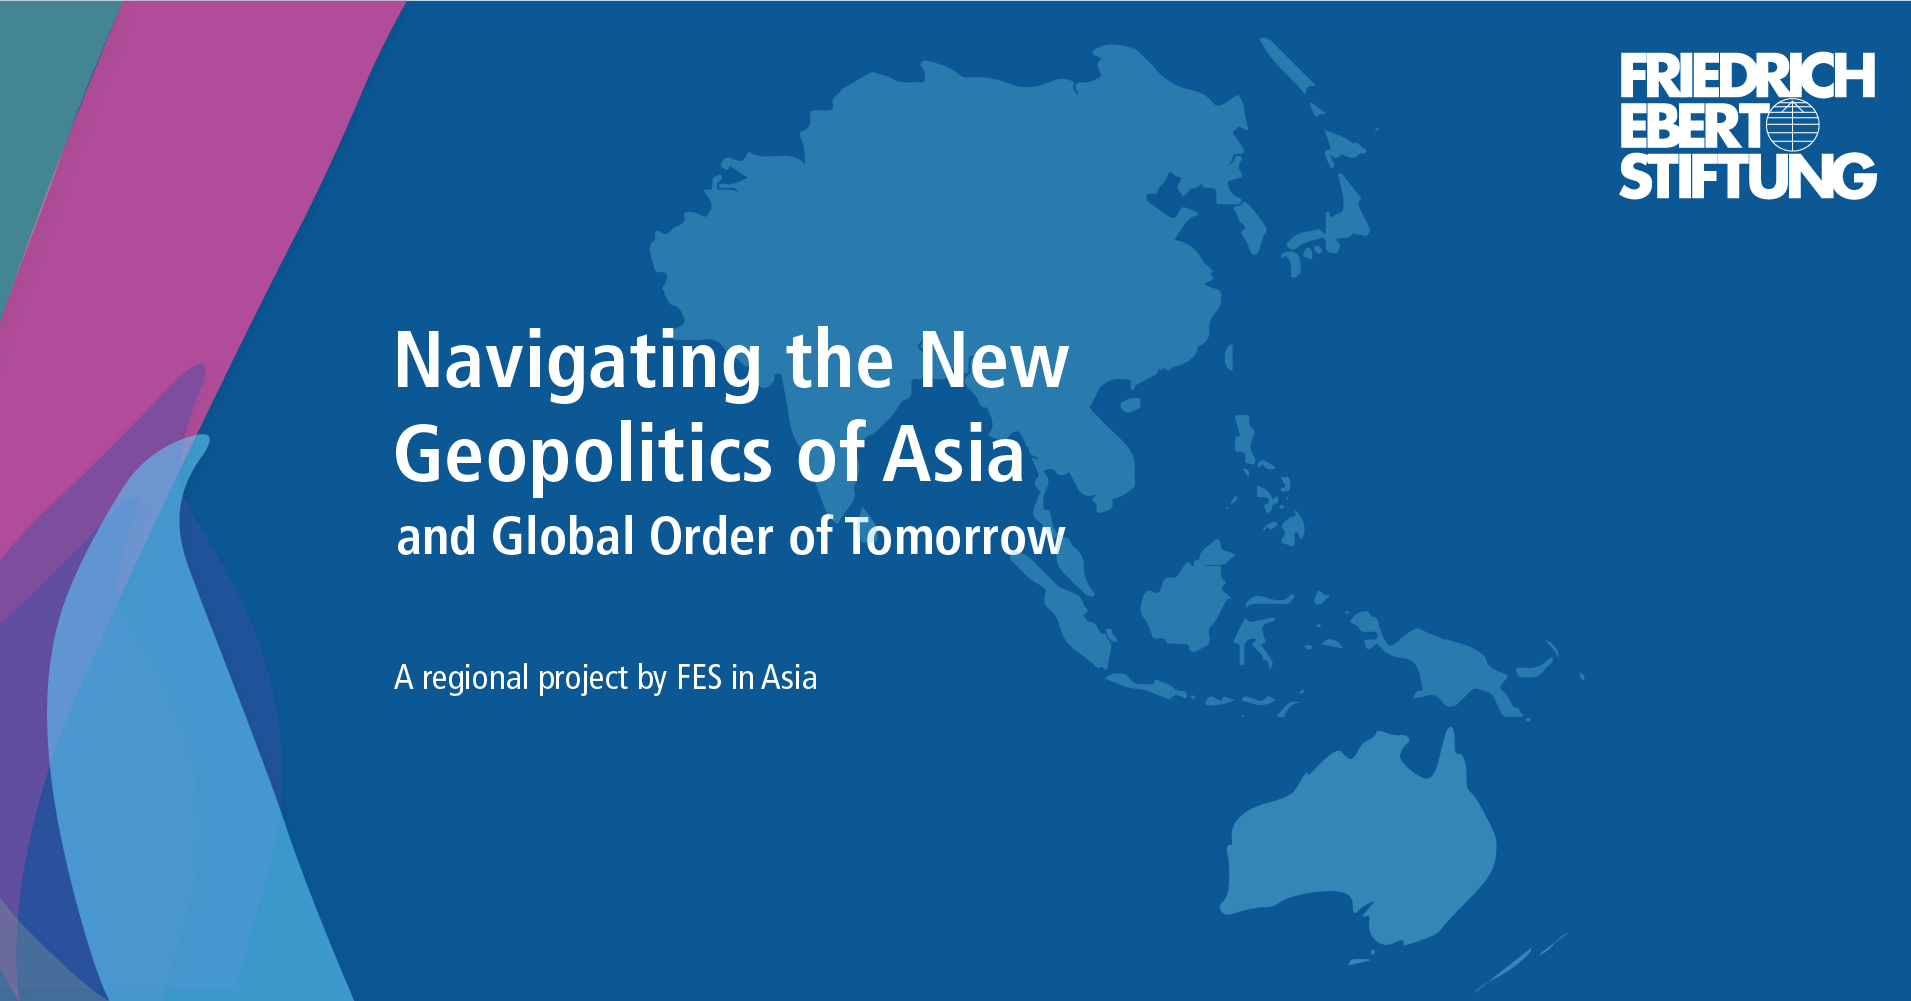 The New Geopolitics of Asia FriedrichEbertStiftung in Asia